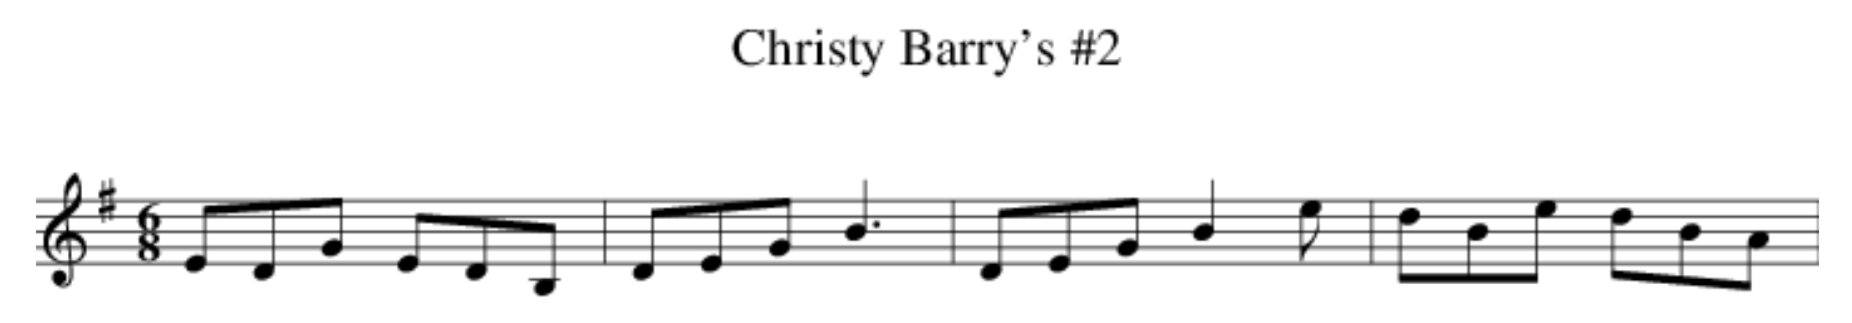 Christie Barry's Number 2.JPG